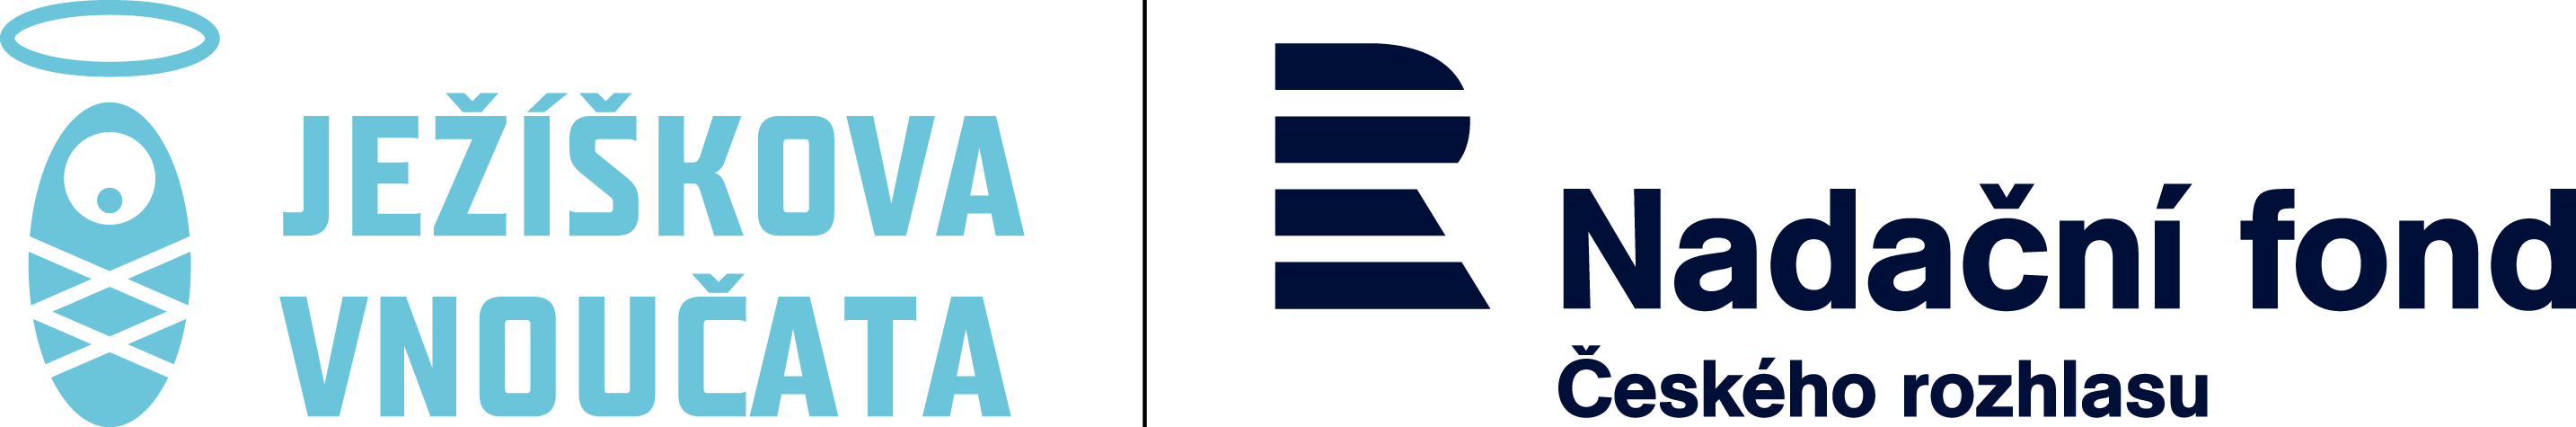 Logo_kompozitni_Jeziskova-vnoucata_Nadacni-fond_RGB-2.png